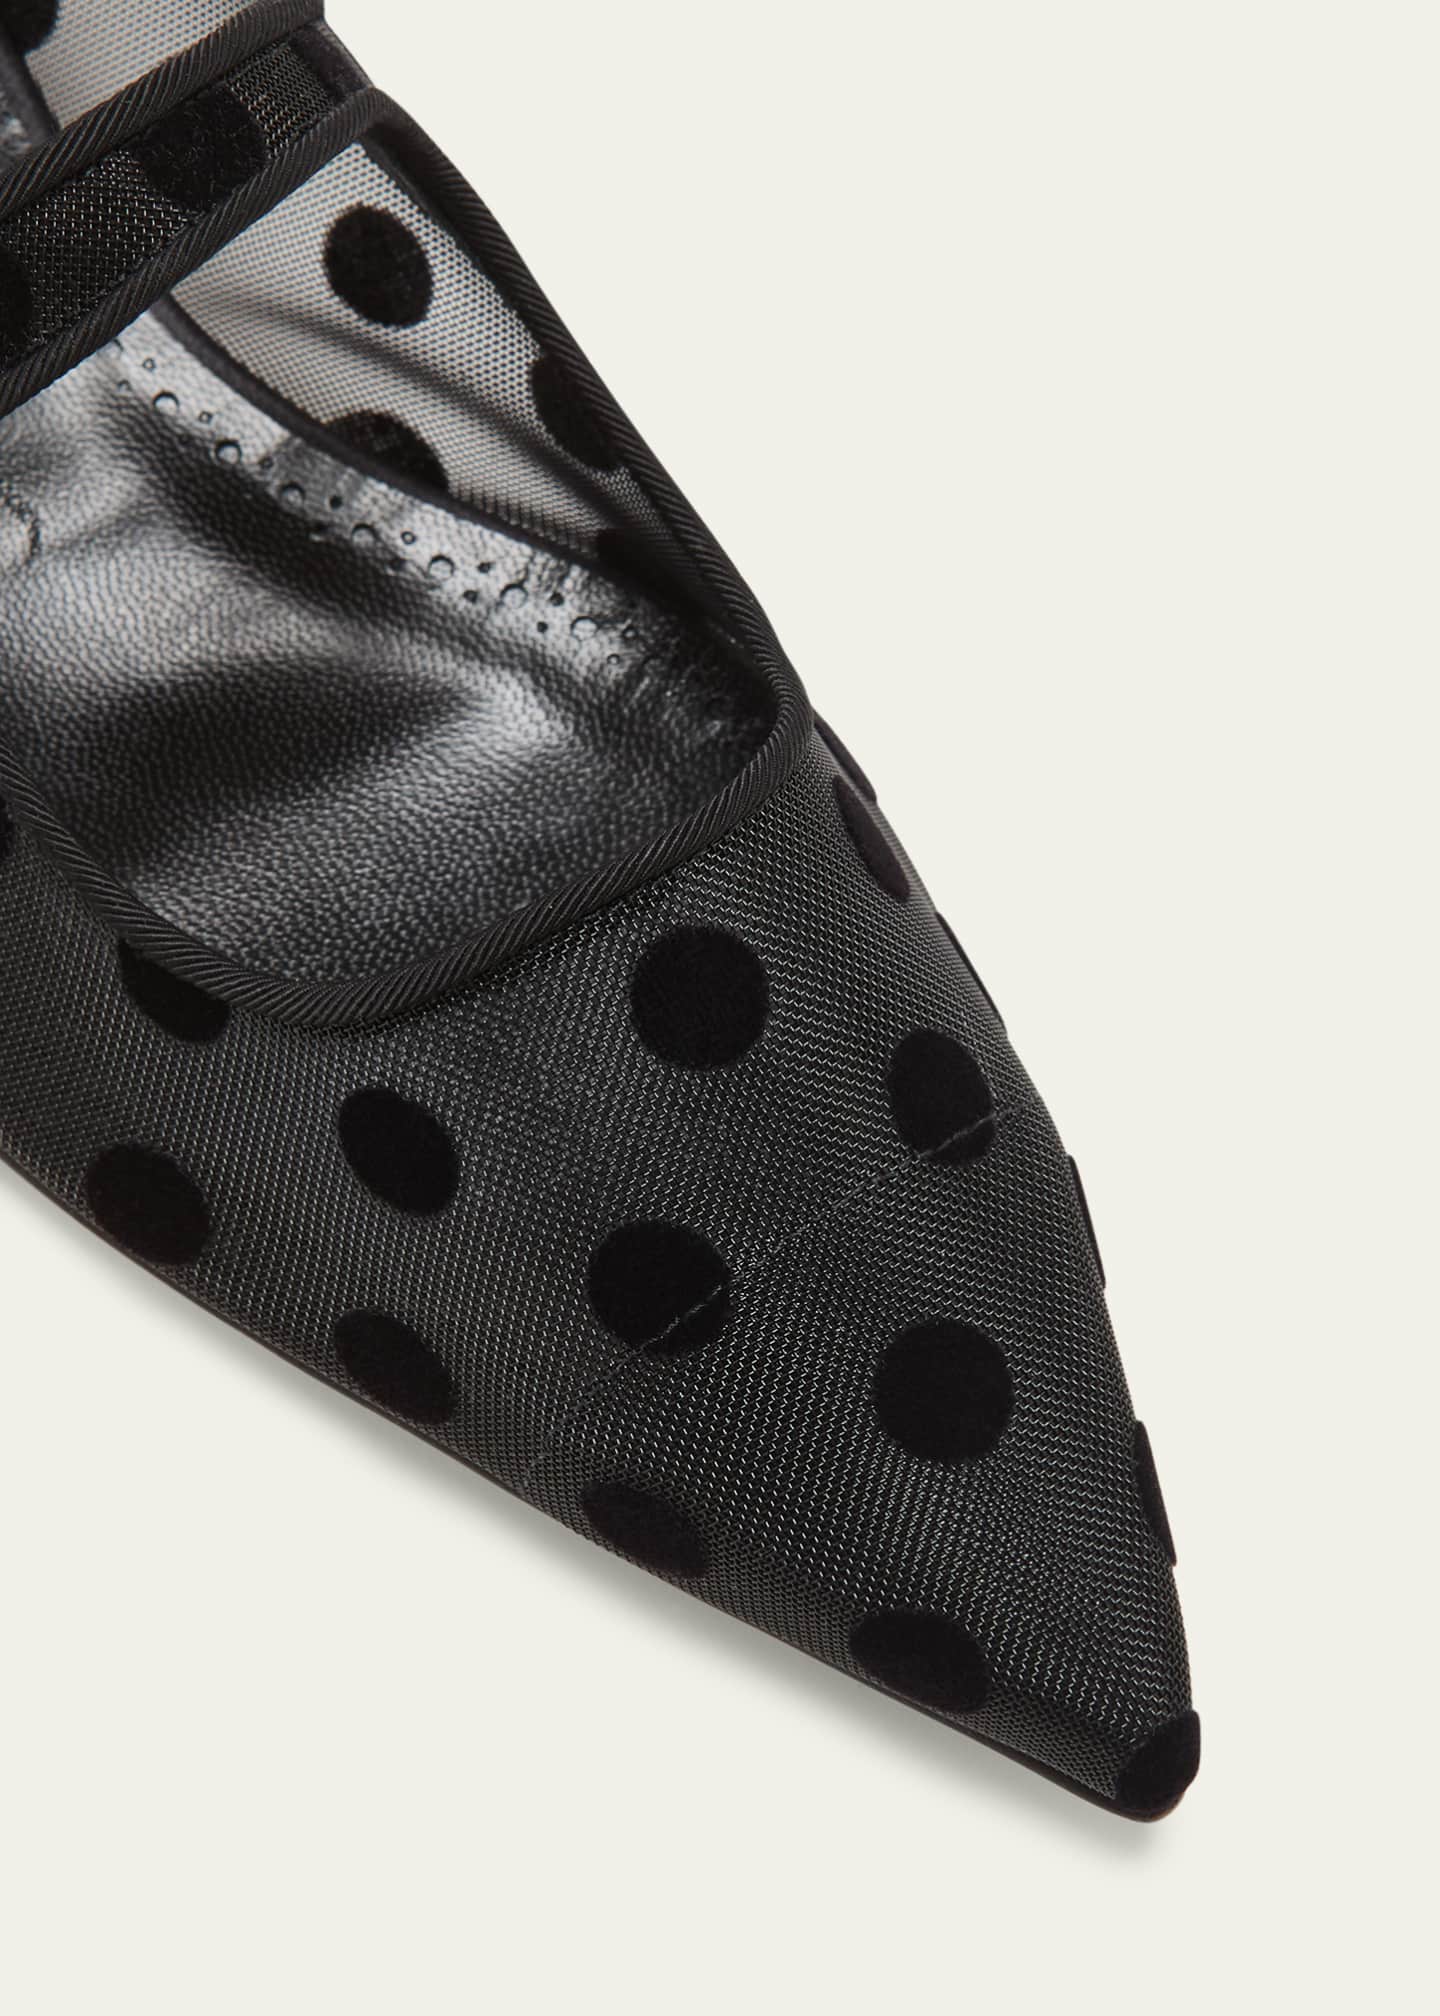 MANOLO BLAHNIK: Campari pumps in mesh with polka dots - Black